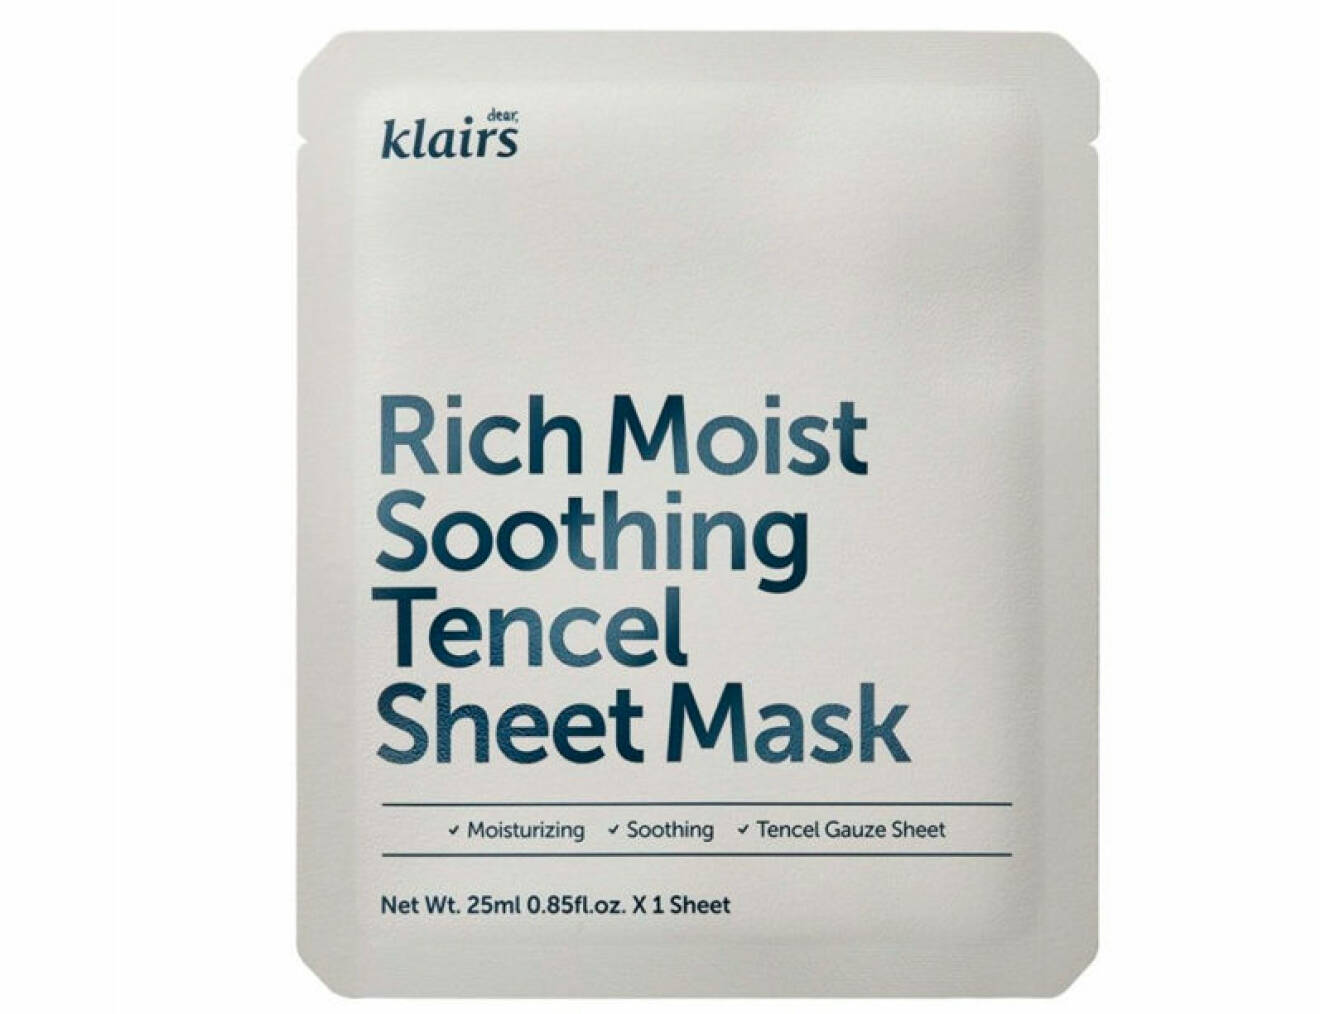 bästa sheetmask klairs rich moist soothing tencel sheet mask recension omdöme betyg